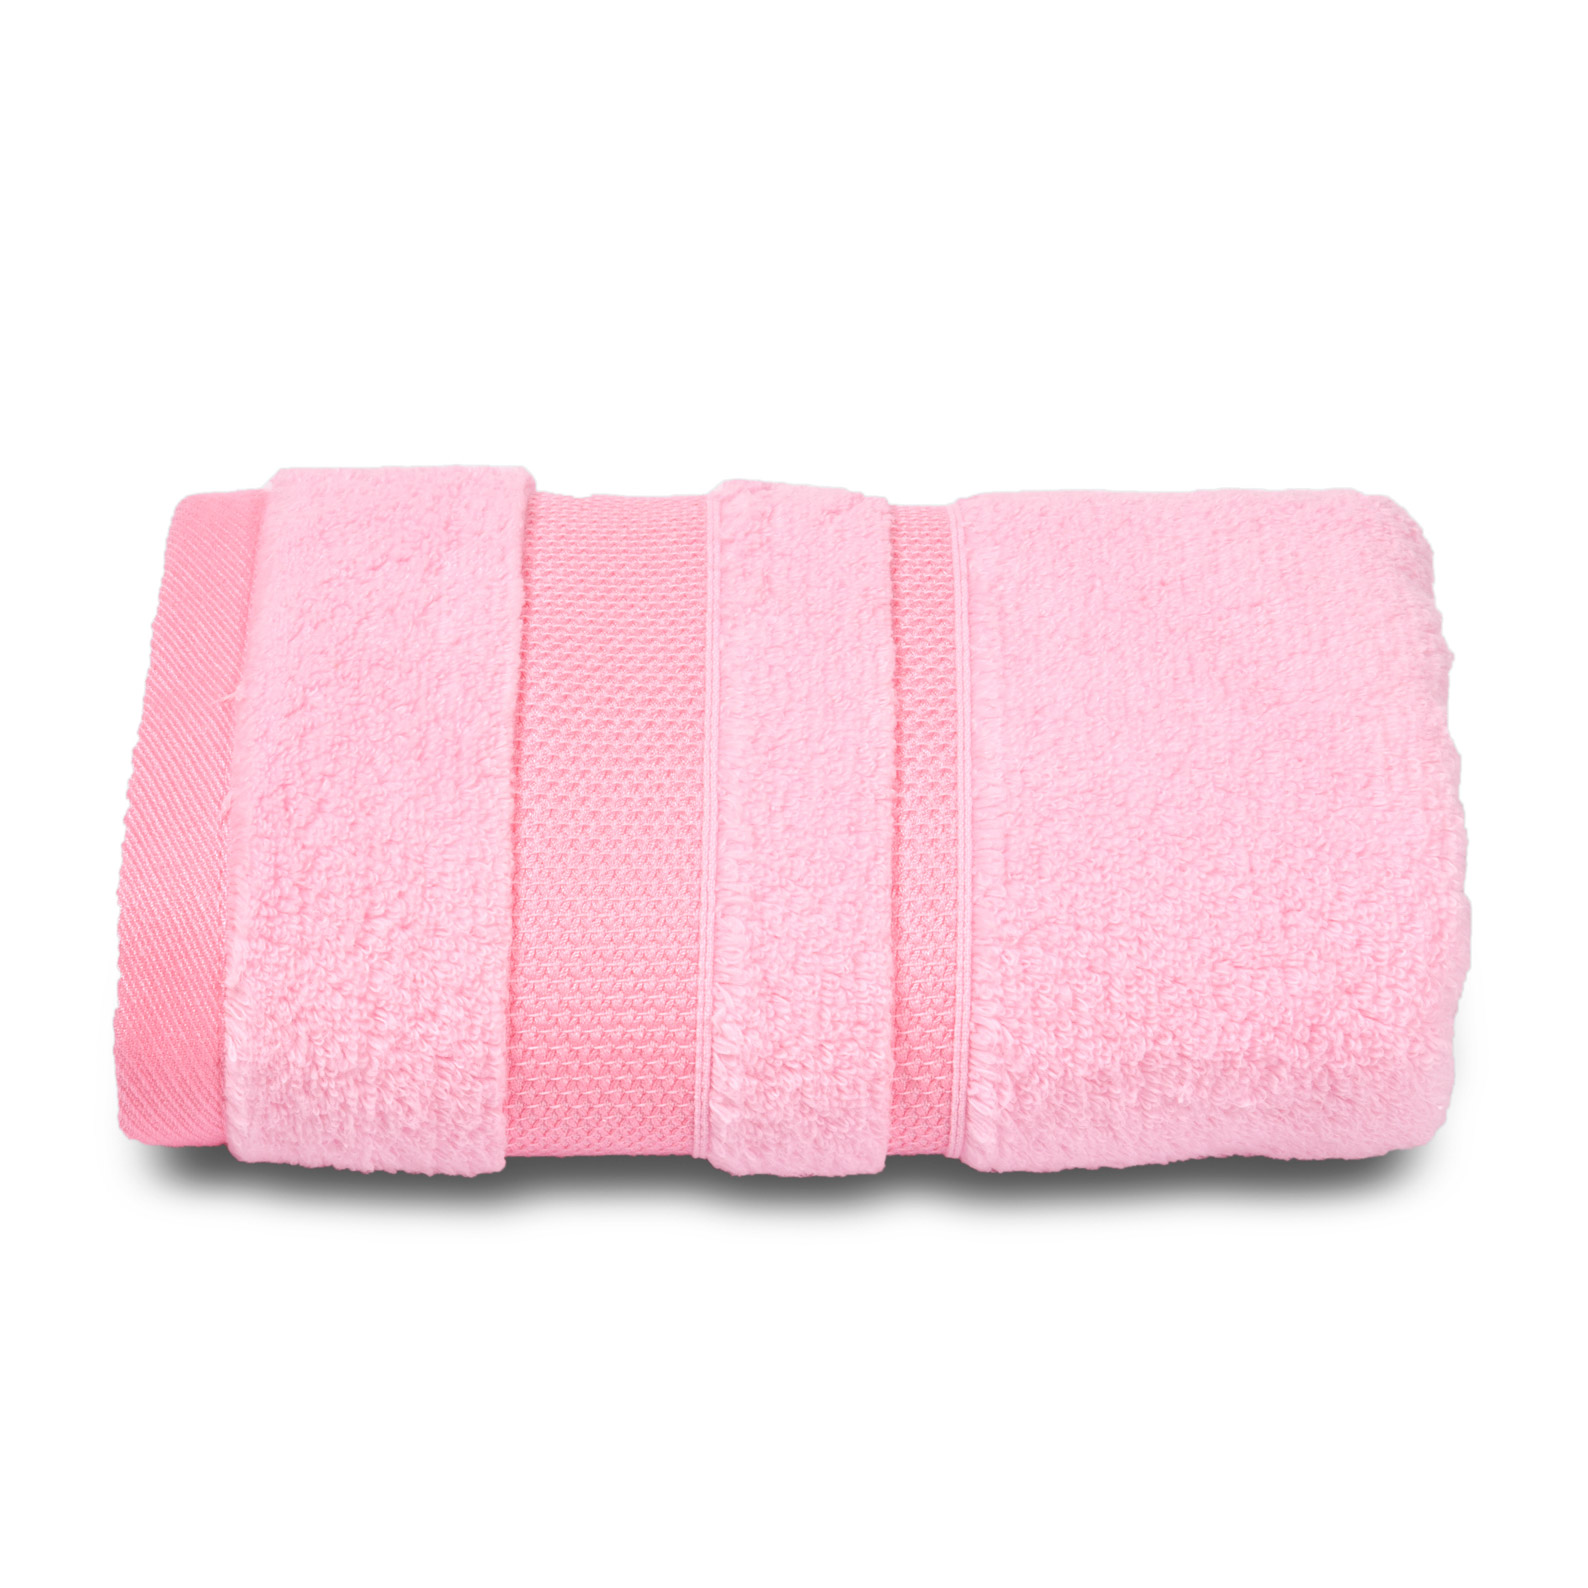 Полотенце махровое Cleanelly perfetto твист 50х100 розовый полотенце айова розовый крем р 40х70